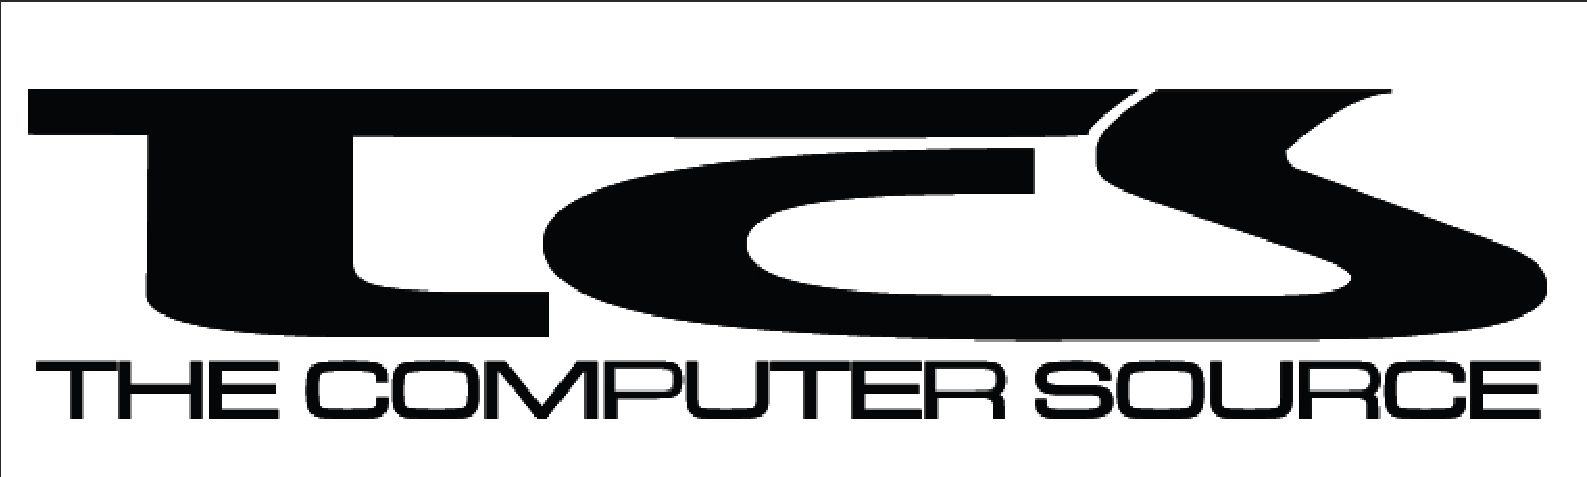 The Computer Source LLC